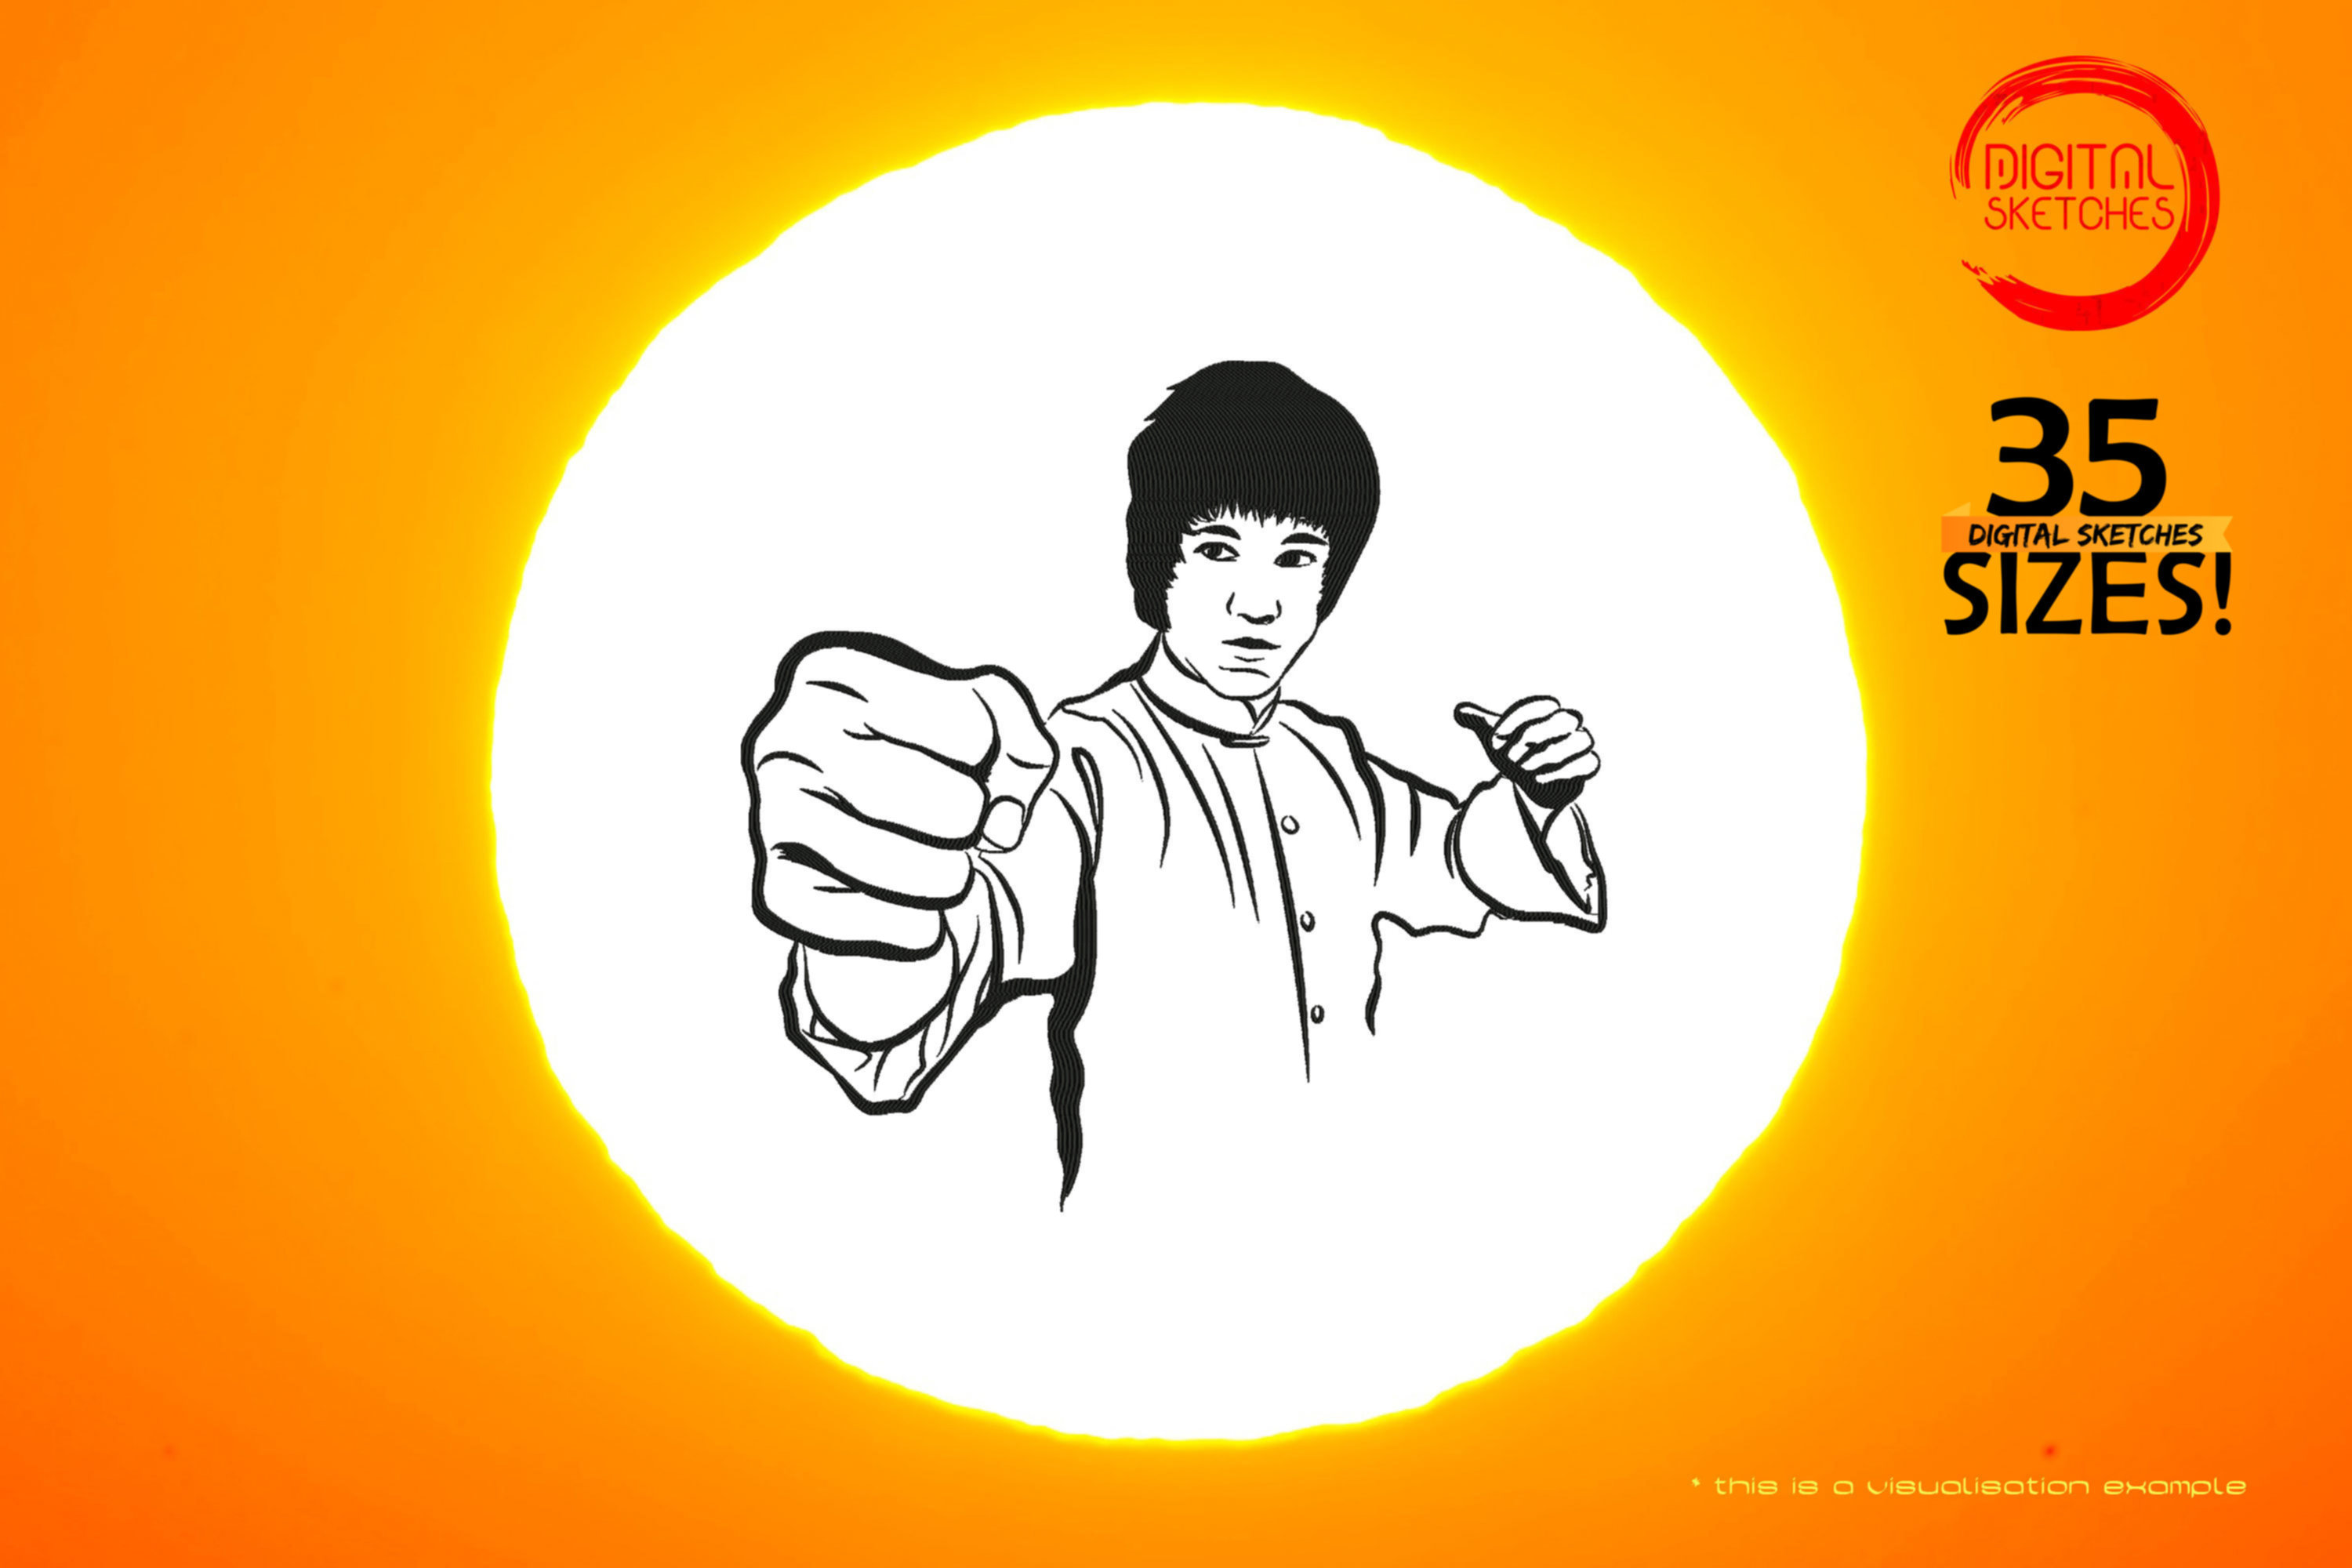 Martial Artist Sketch Tribute To Martial Artist Lee Jun-fan aka Bruce Lee